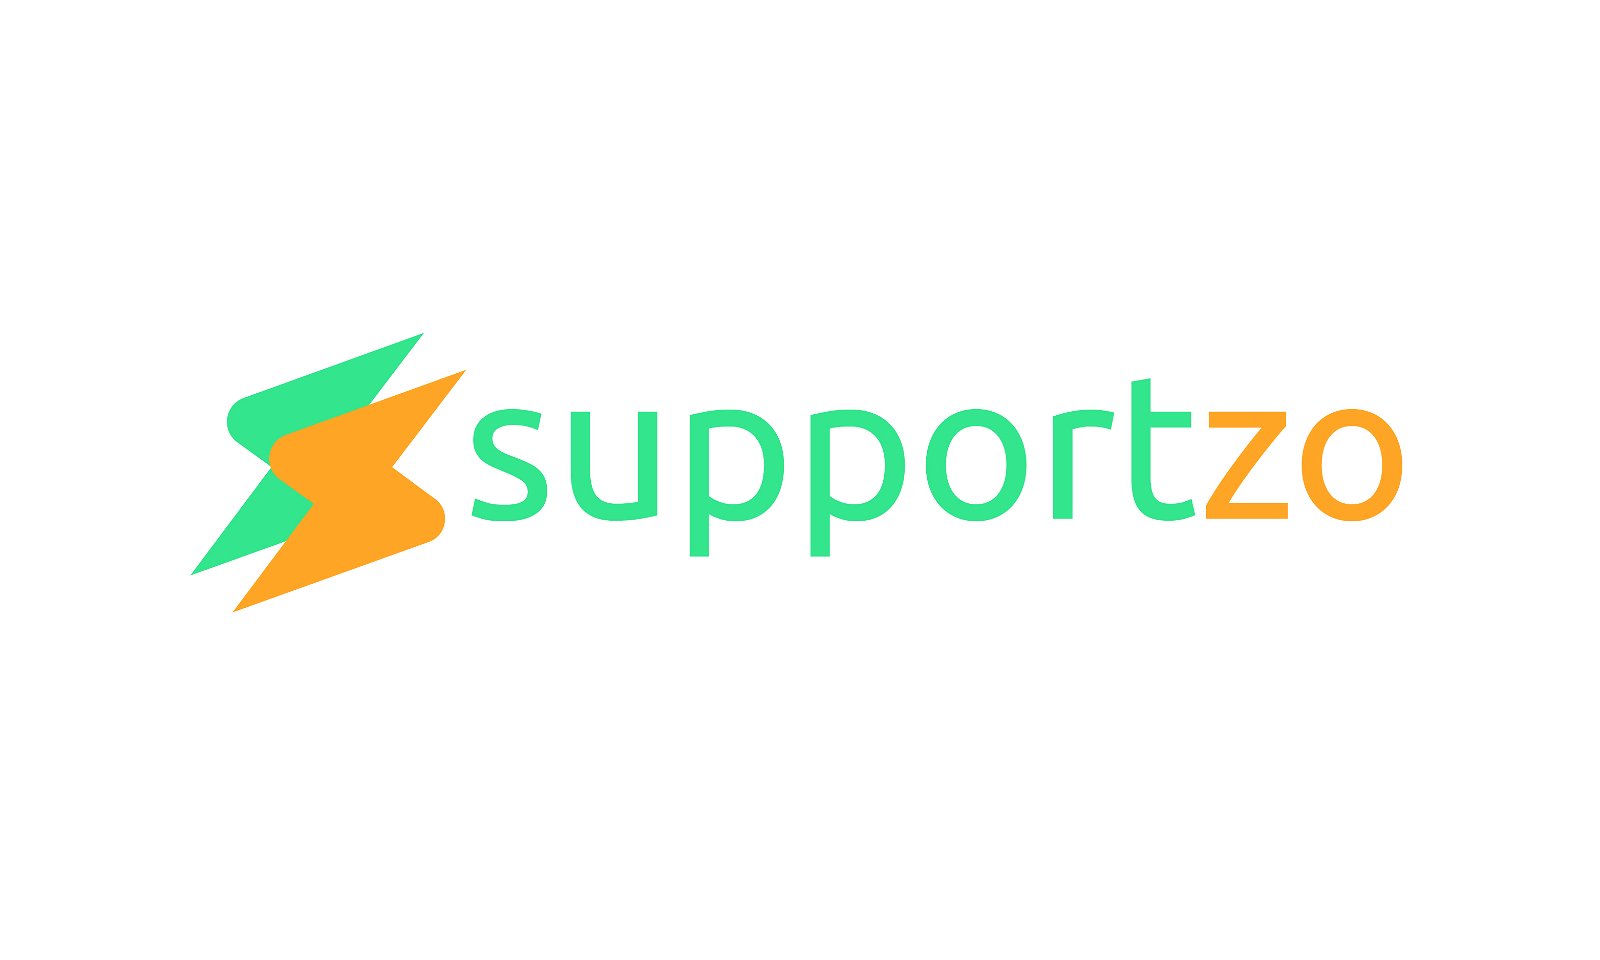 Supportzo.com - Creative brandable domain for sale